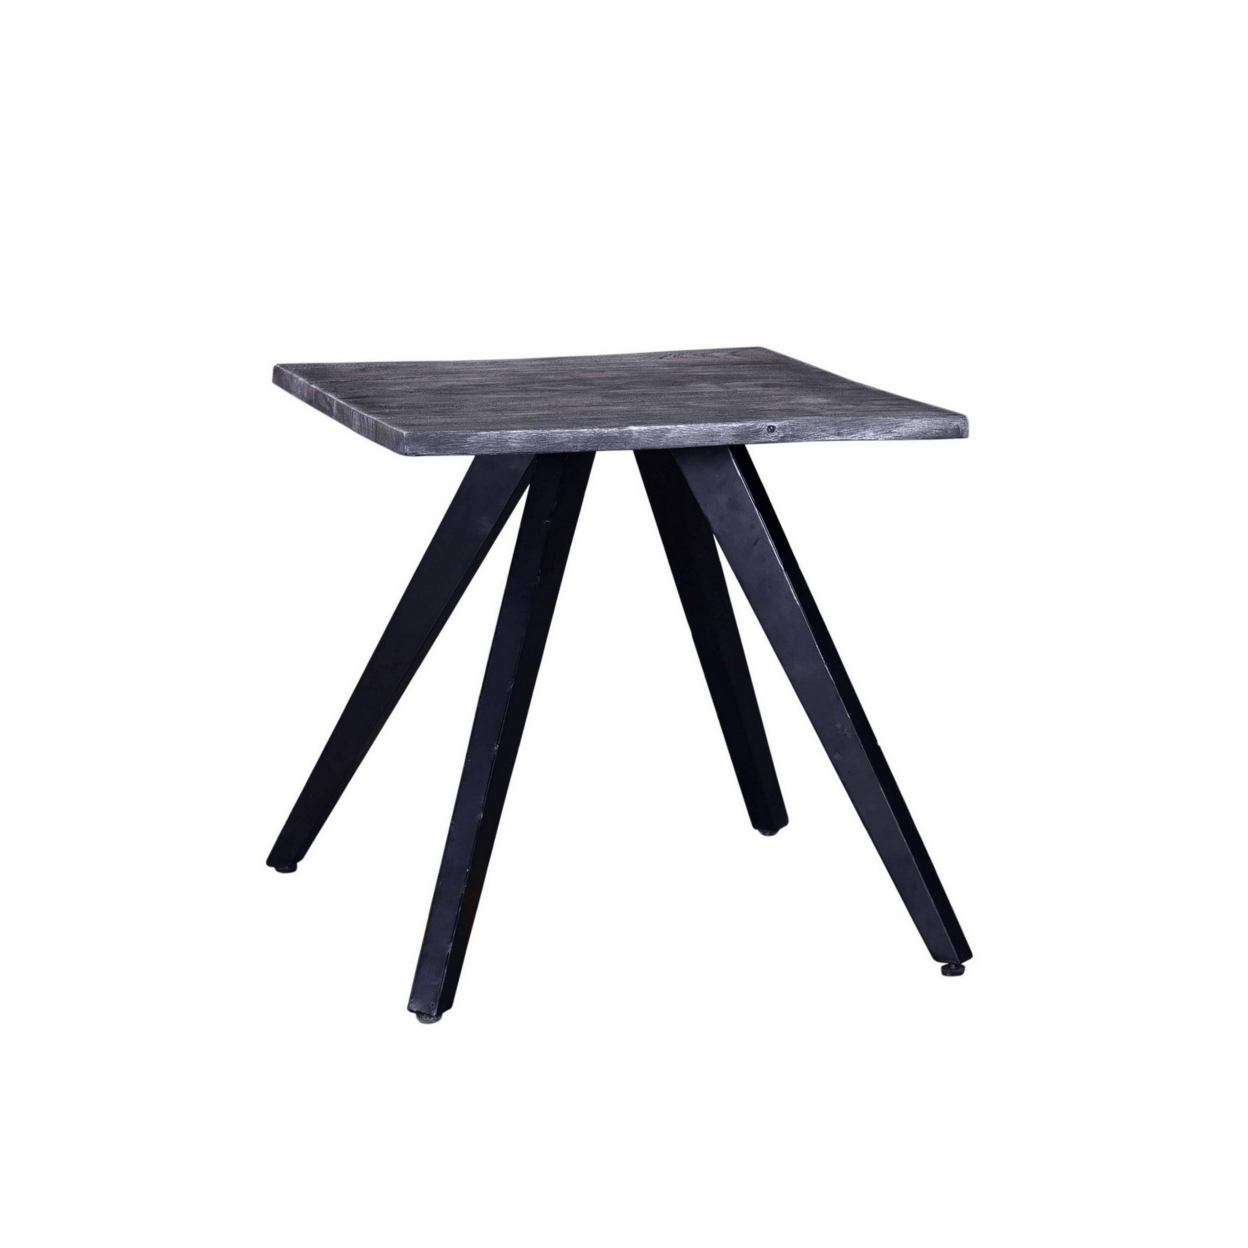 Chad 24 Inch Side End Table, Dark Gray Acacia Wood Top, Black Angled Legs- Saltoro Sherpi